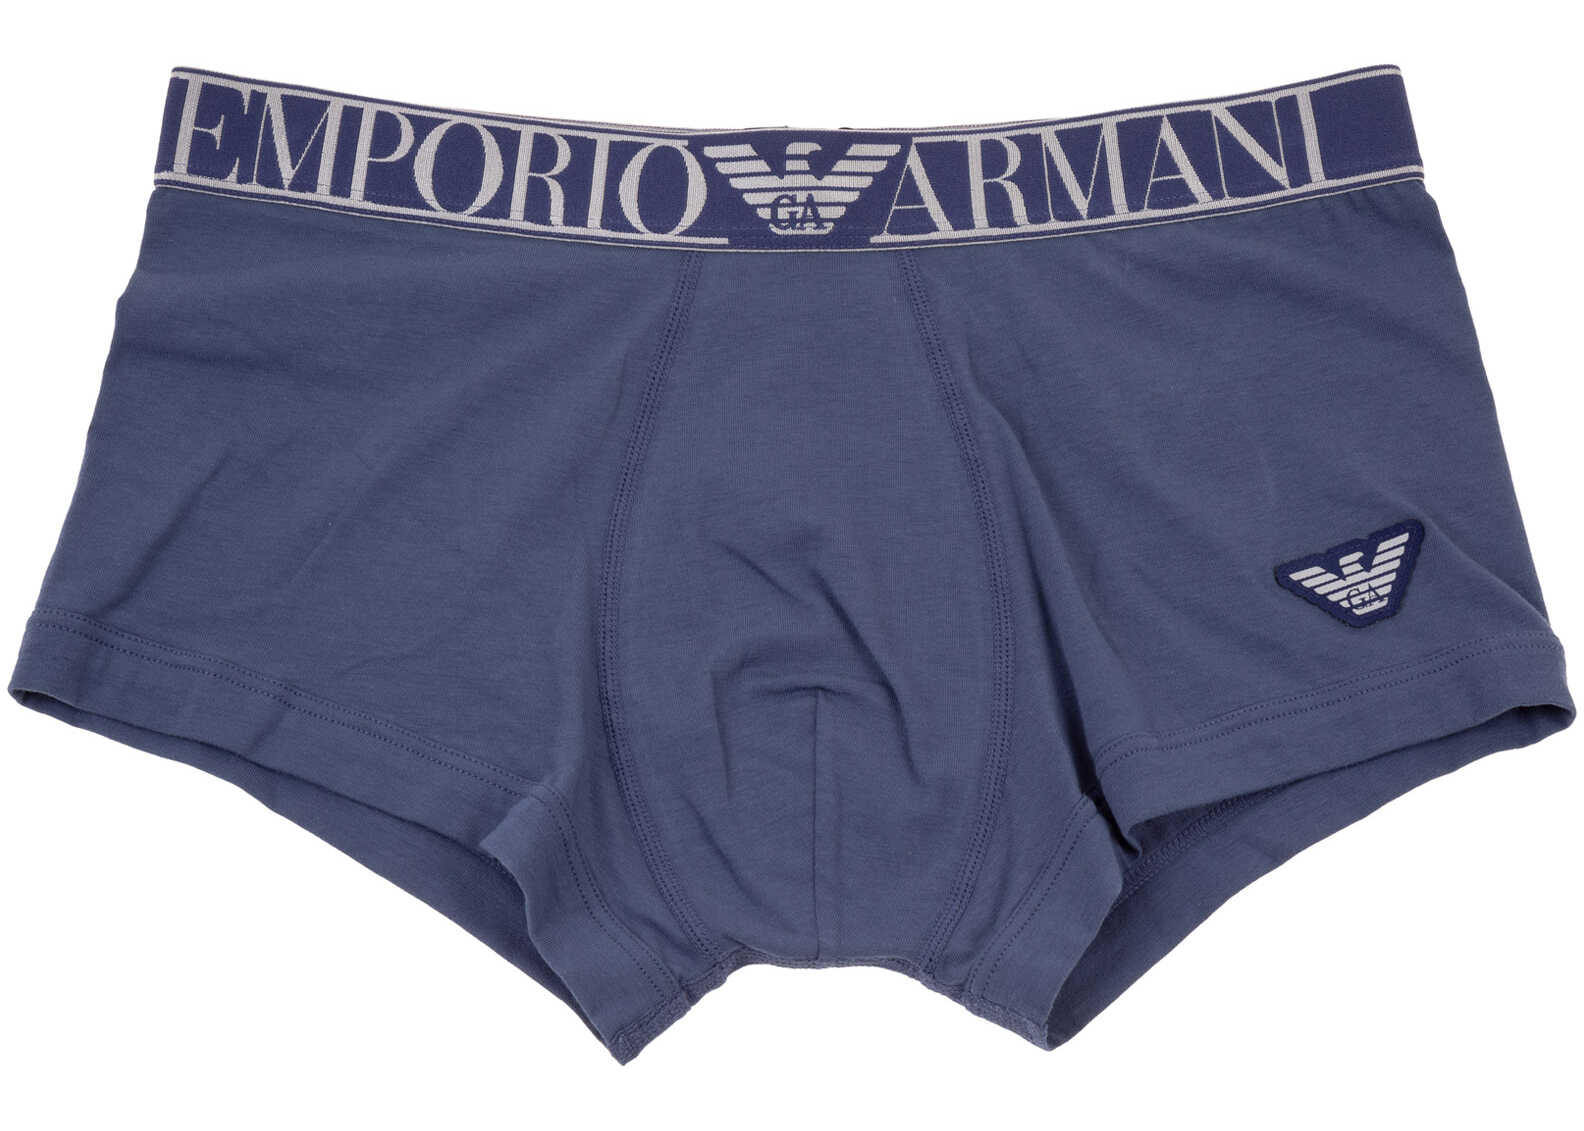 Emporio Armani Boxer Shorts 1113892R51207634 Blue